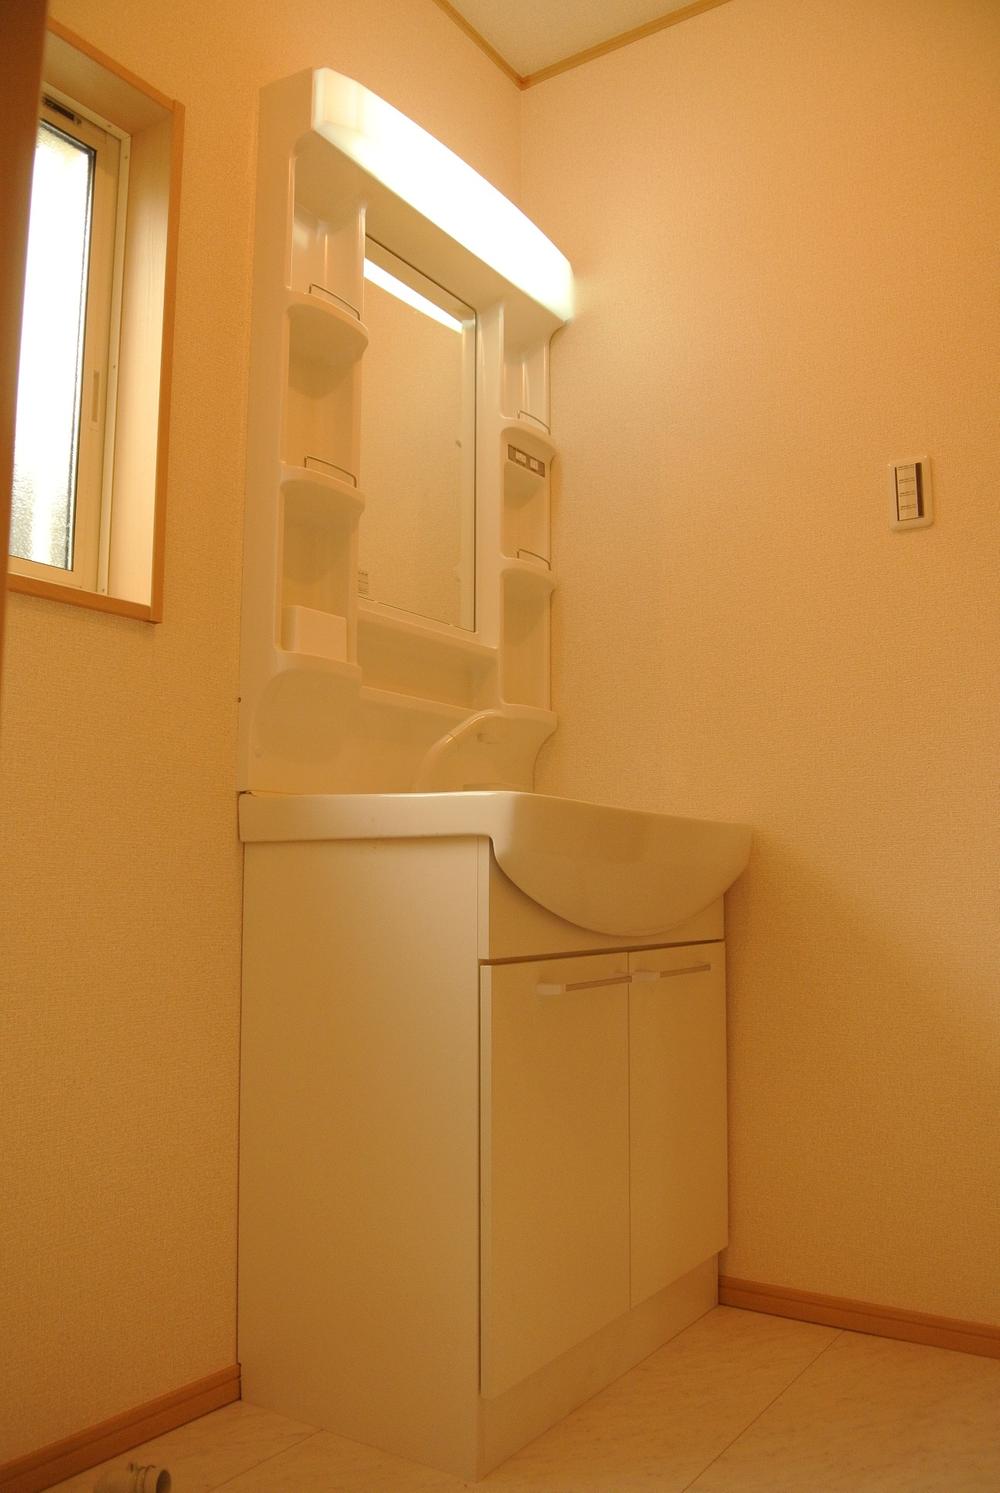 Wash basin, toilet. Room (August 2013) shooting 1 Building